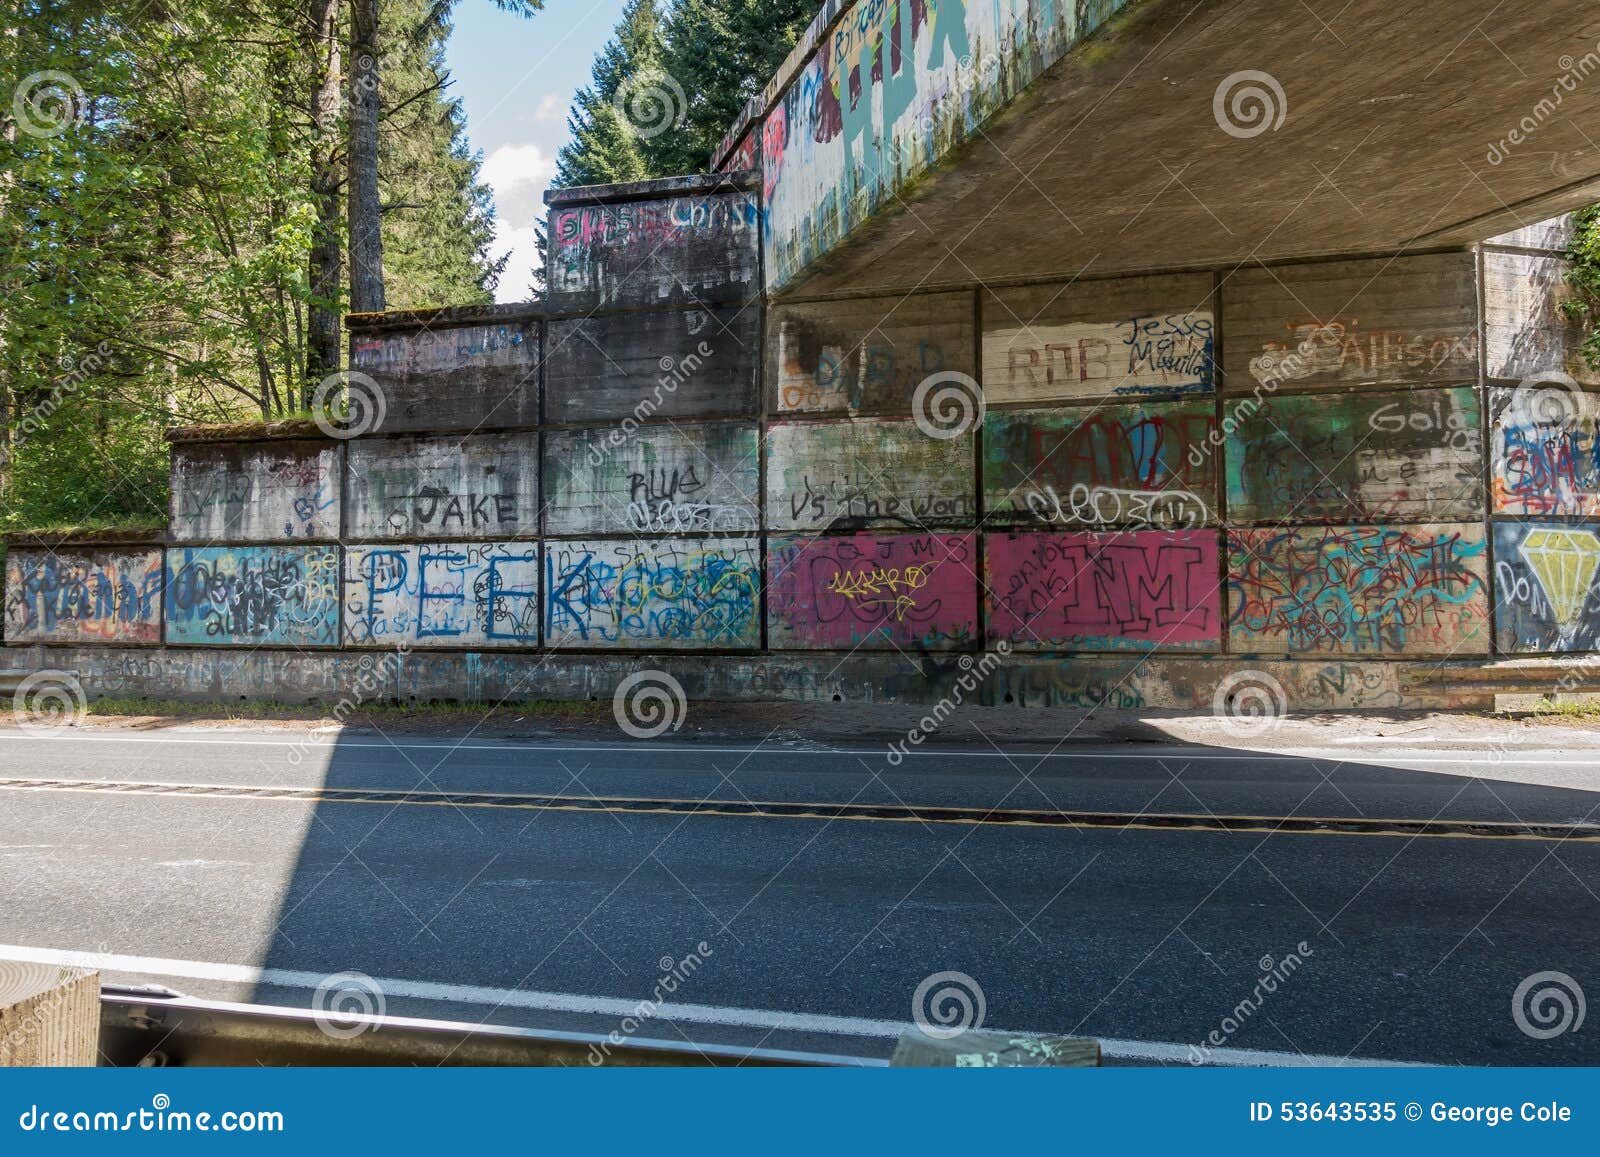 Overpass graffiti